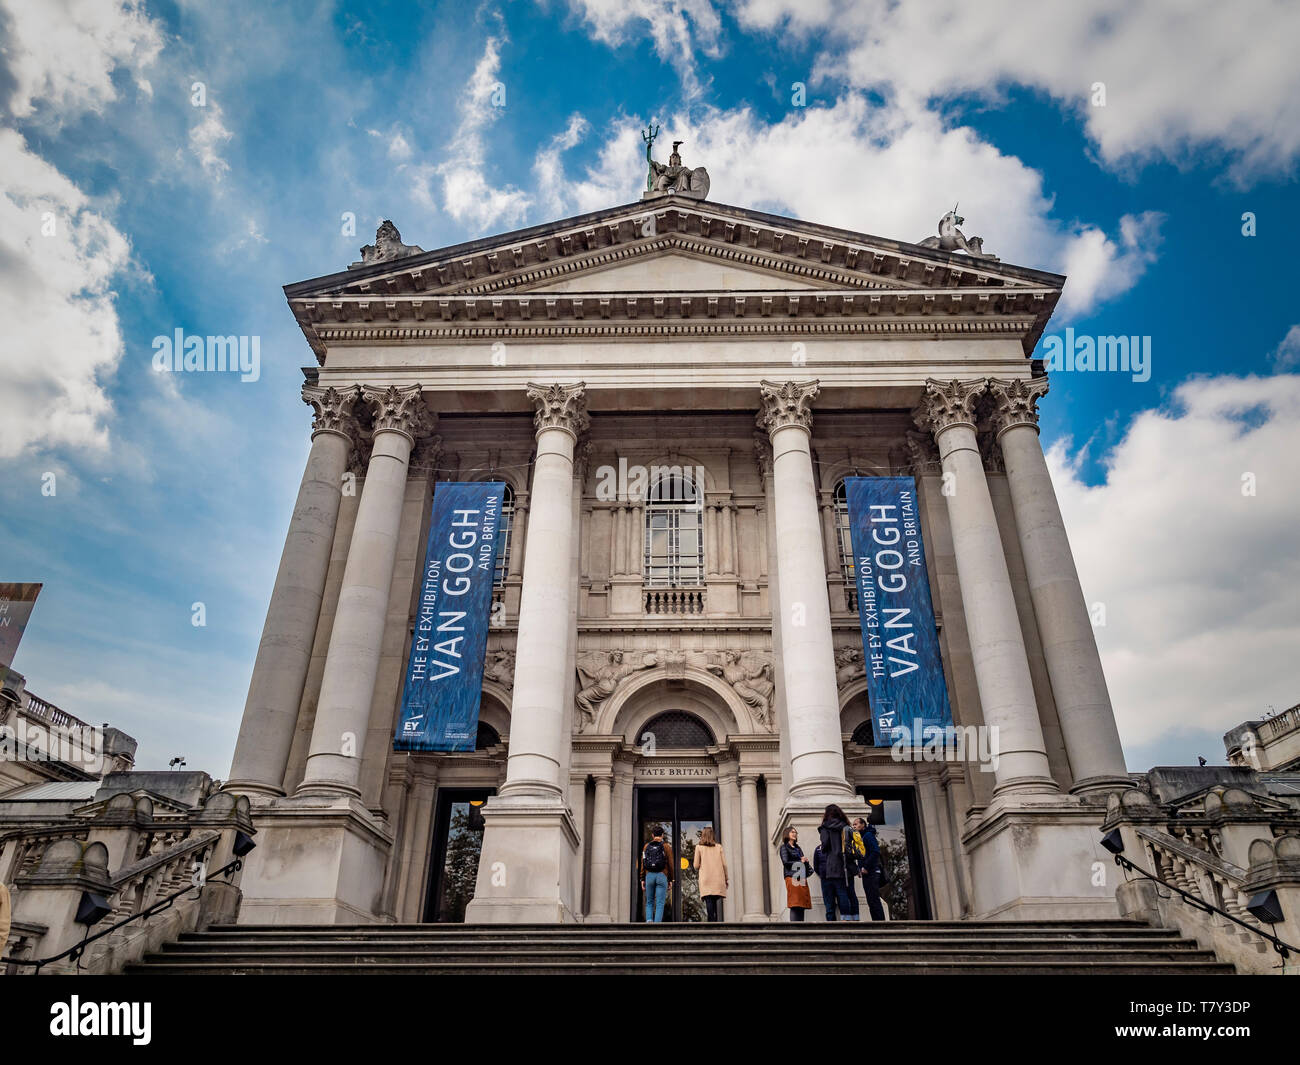 Tate Britain art gallery, Millbank, City of Westminster, London, UK. Stock Photo